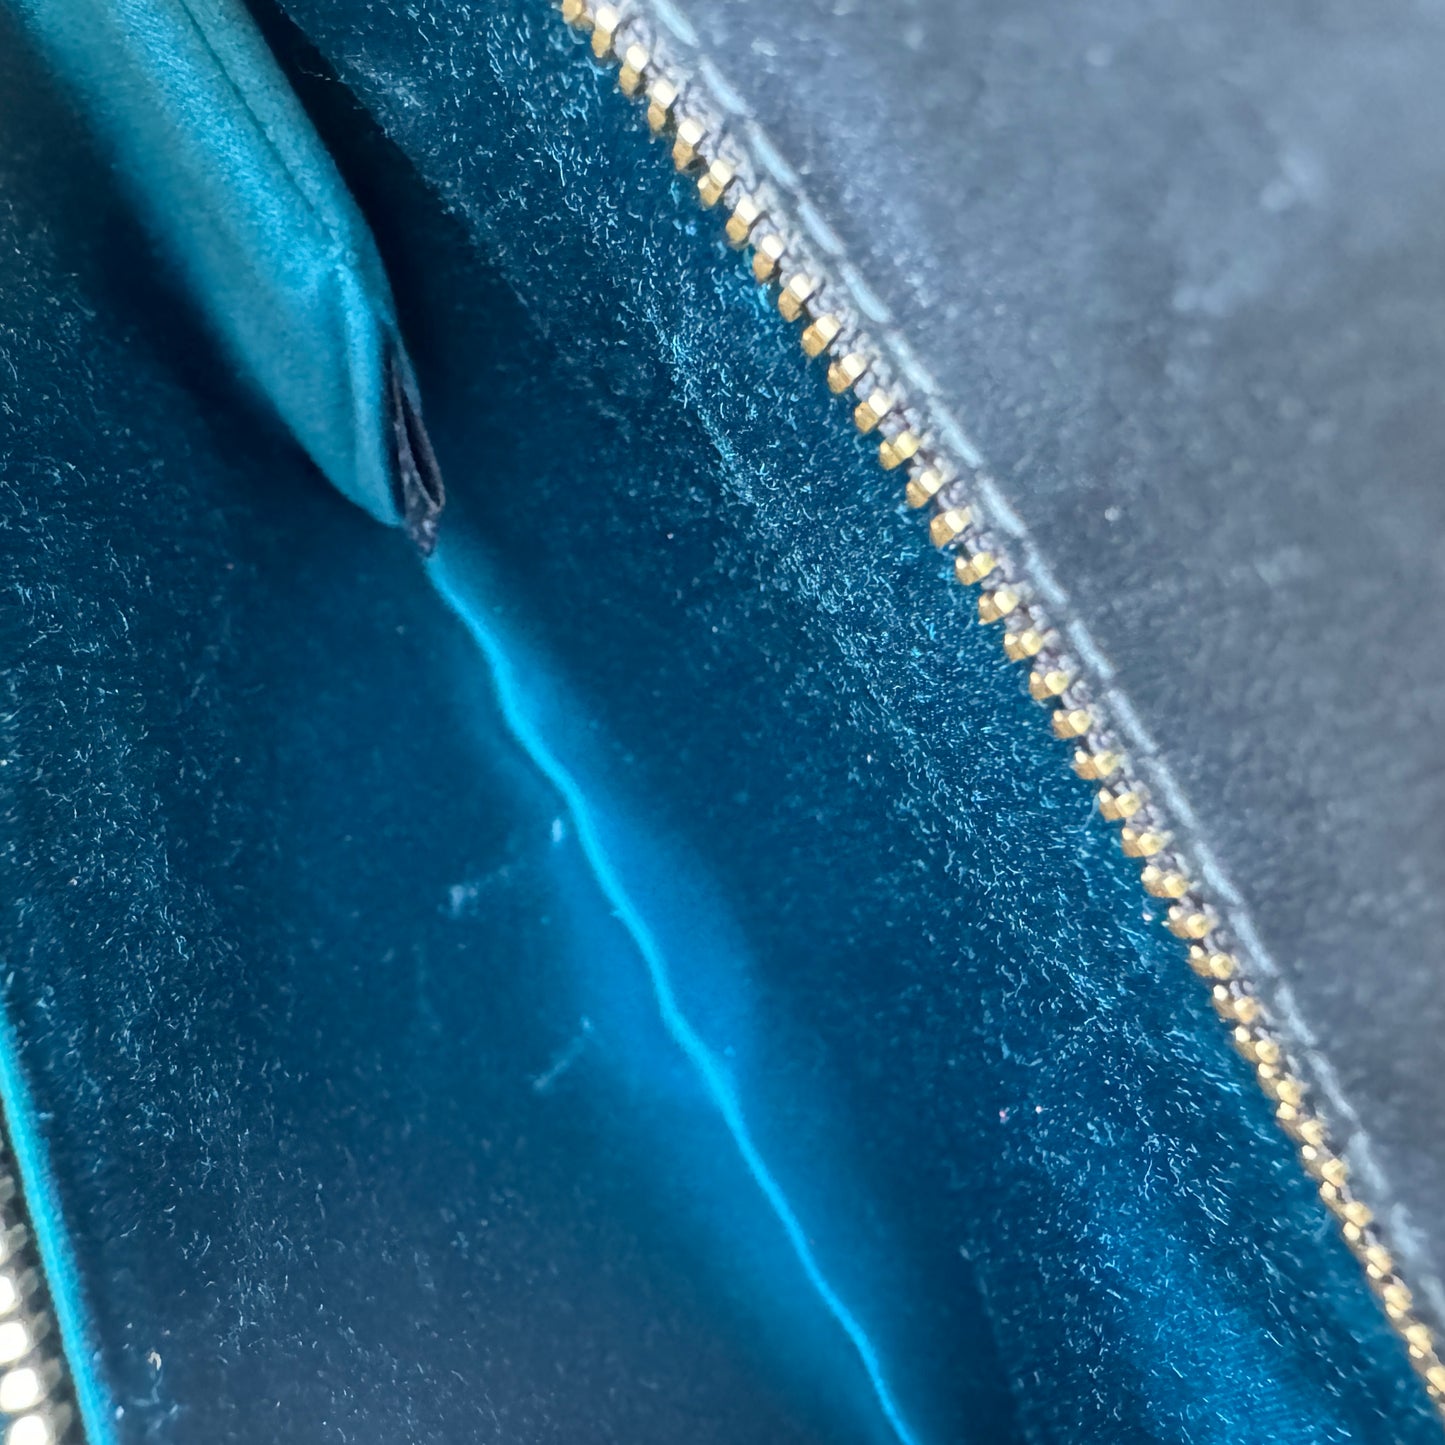 Gucci Suede Medium Ophidia Chain Shoulder Bag